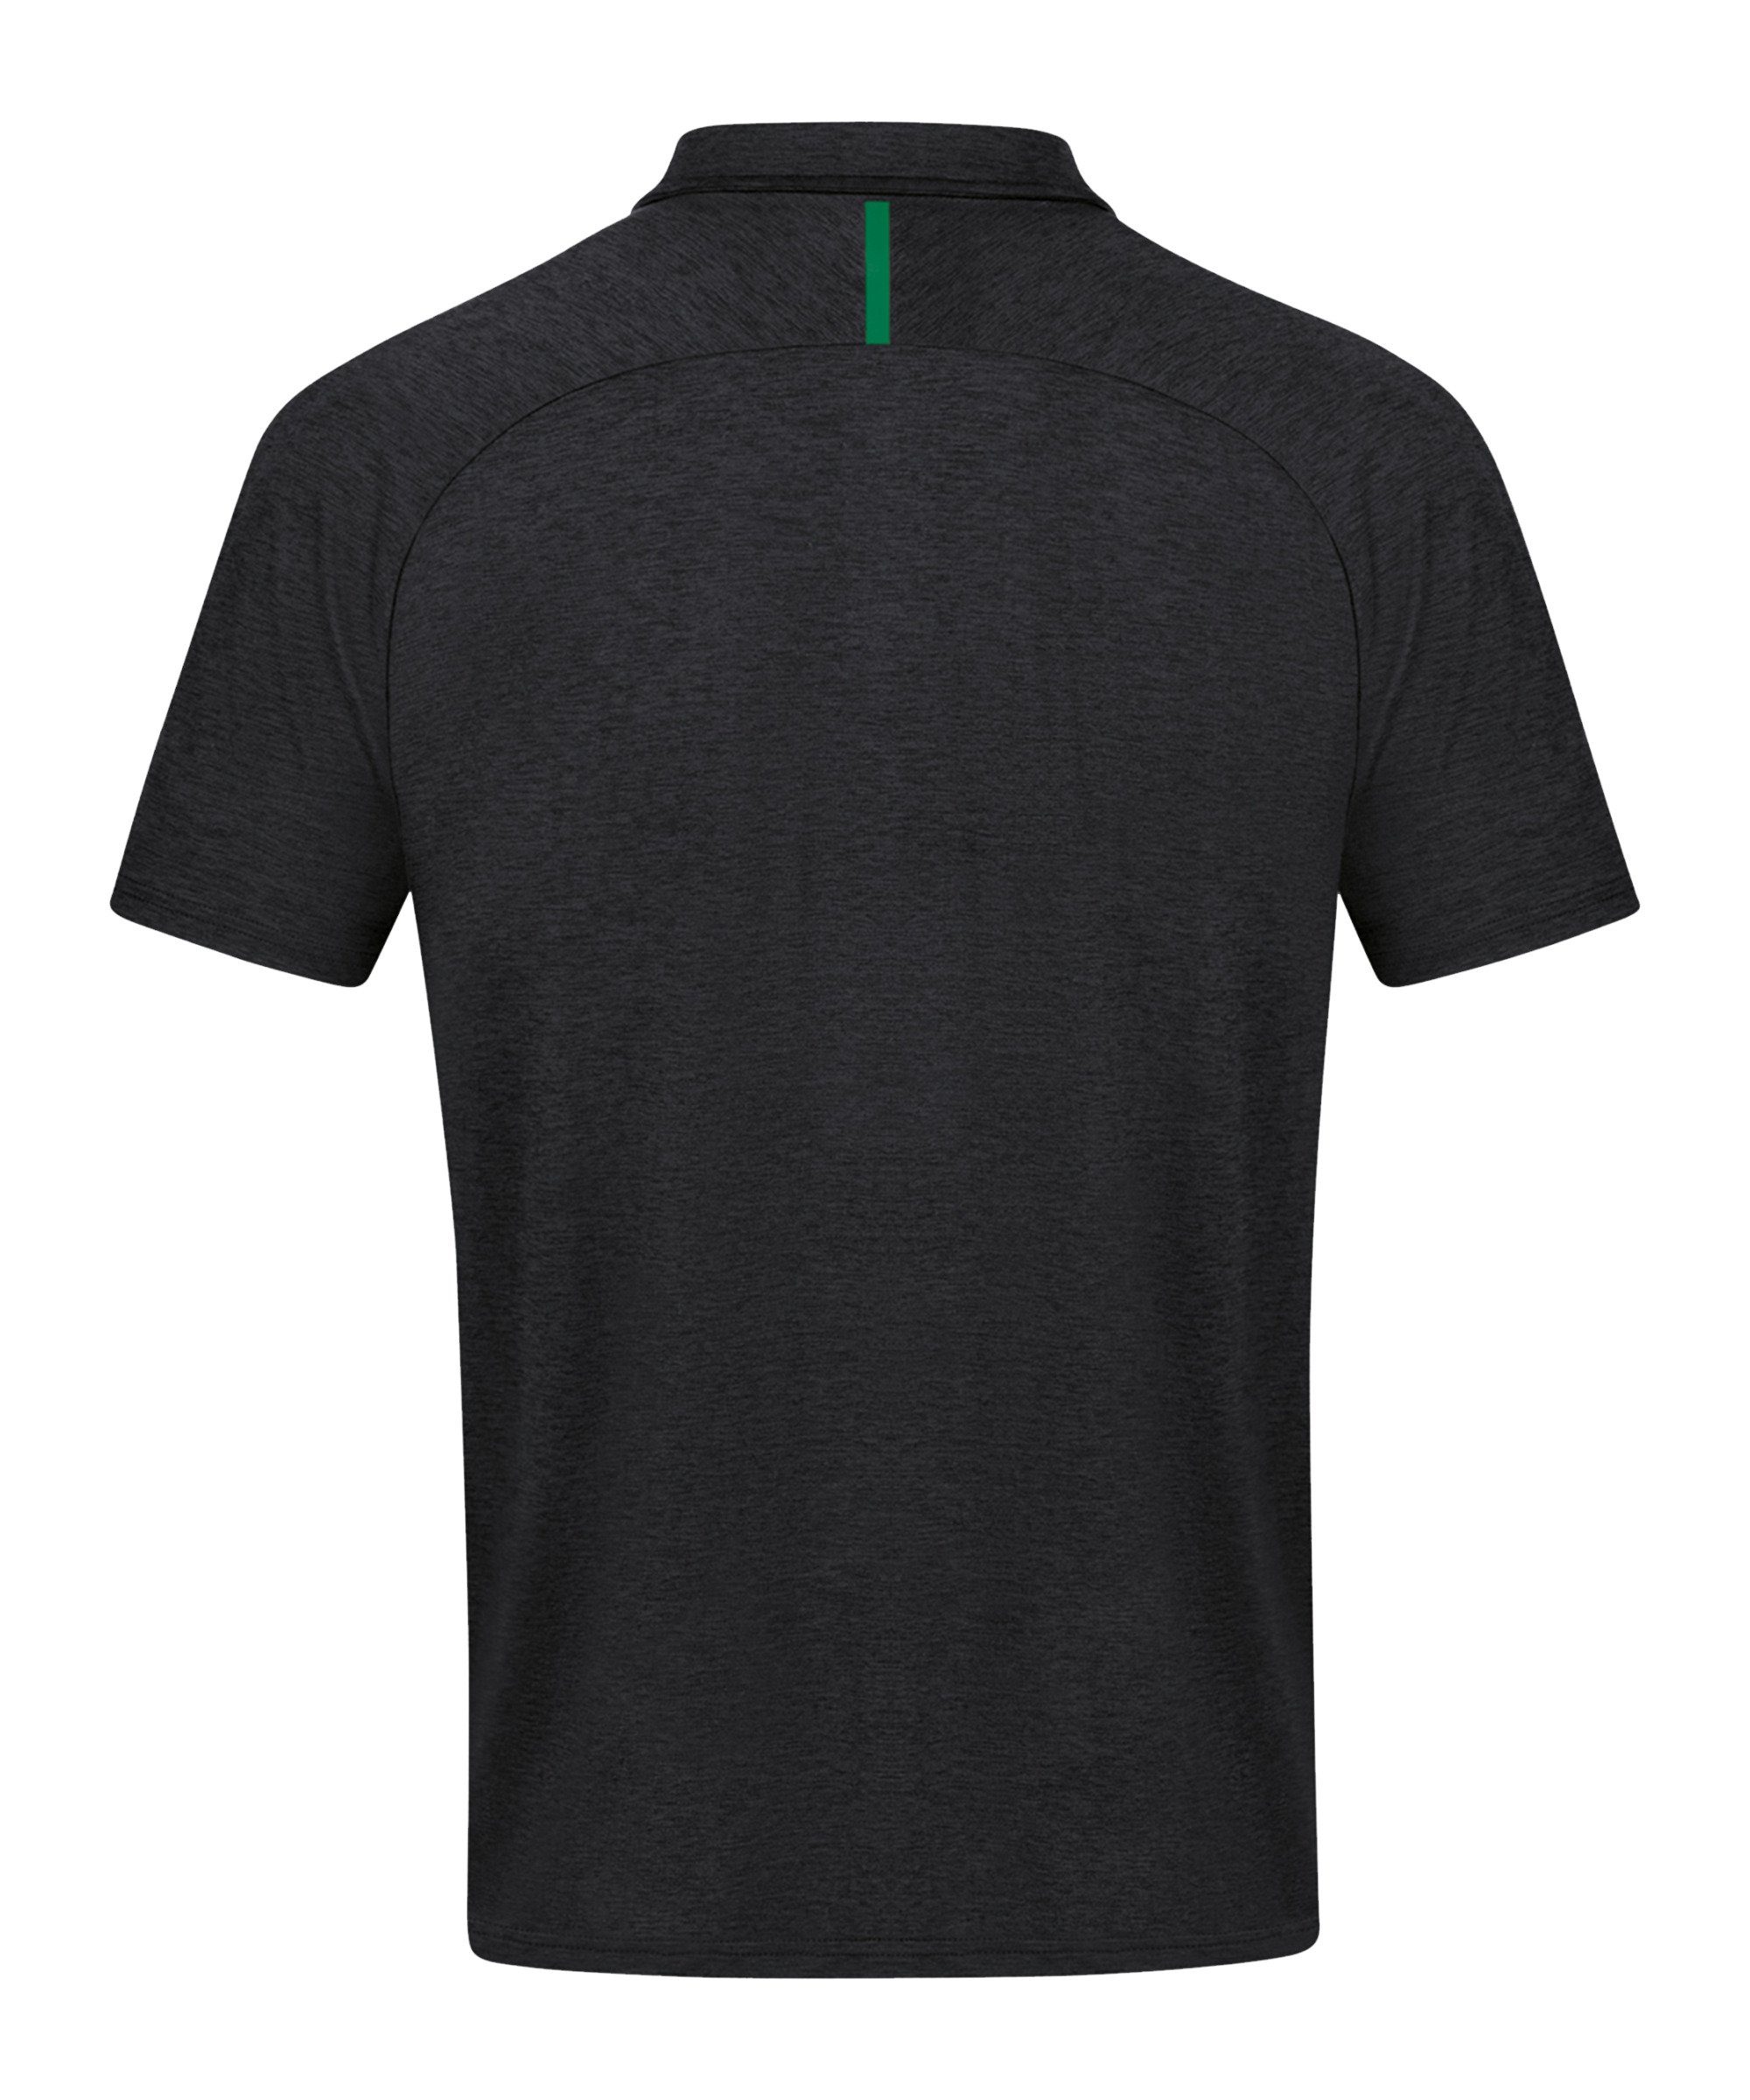 Jako Challenge Polo default T-Shirt schwarzgruen